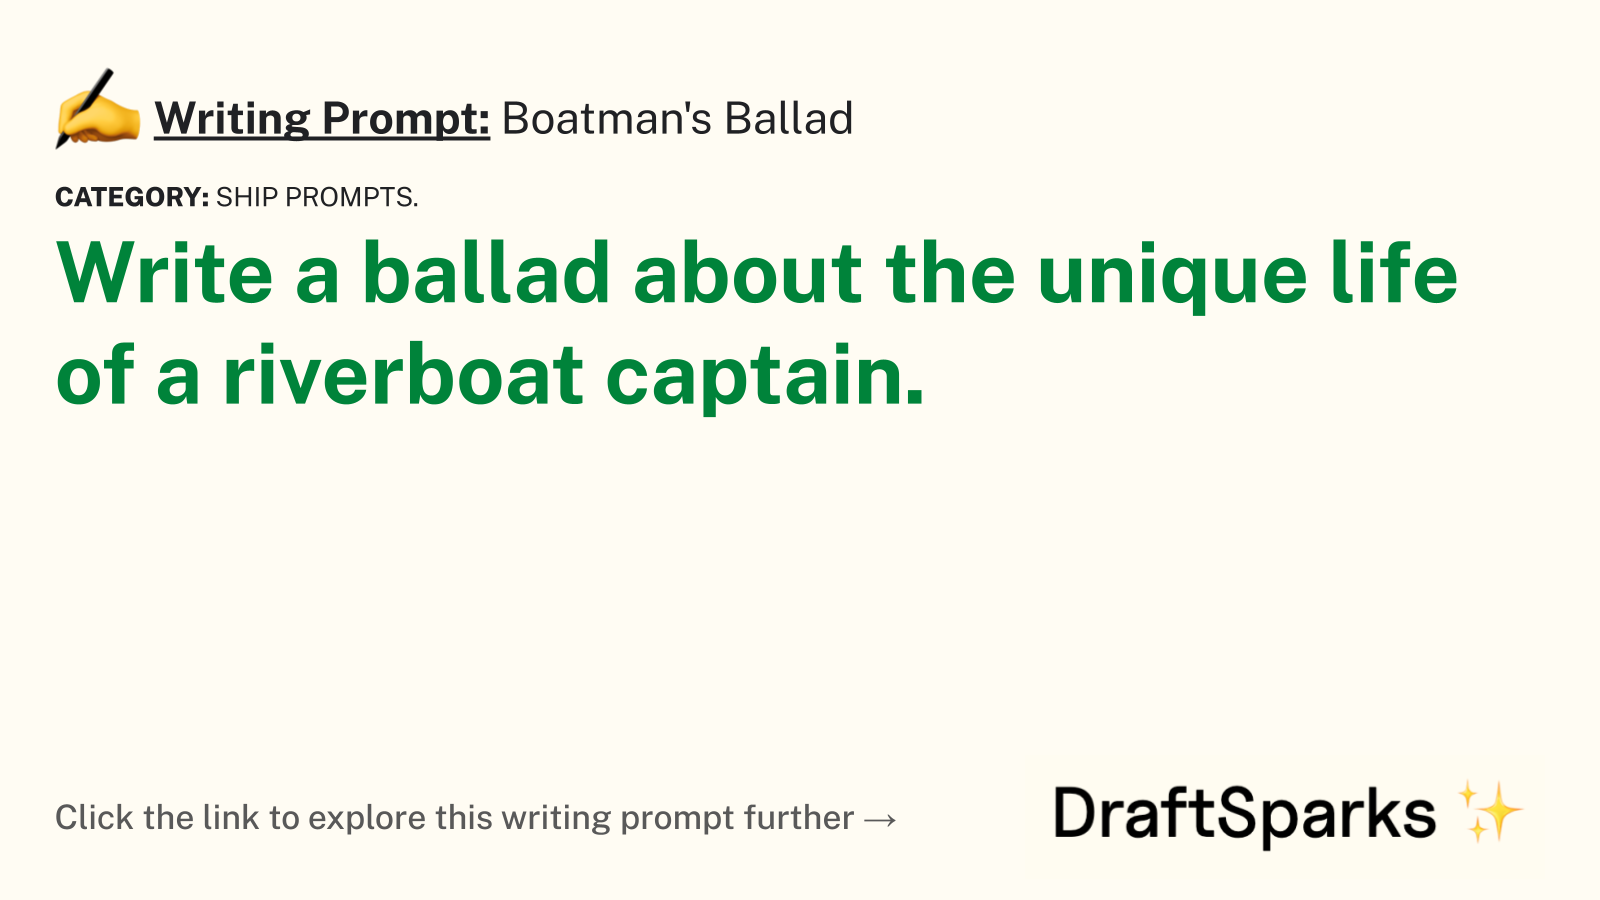 Boatman’s Ballad